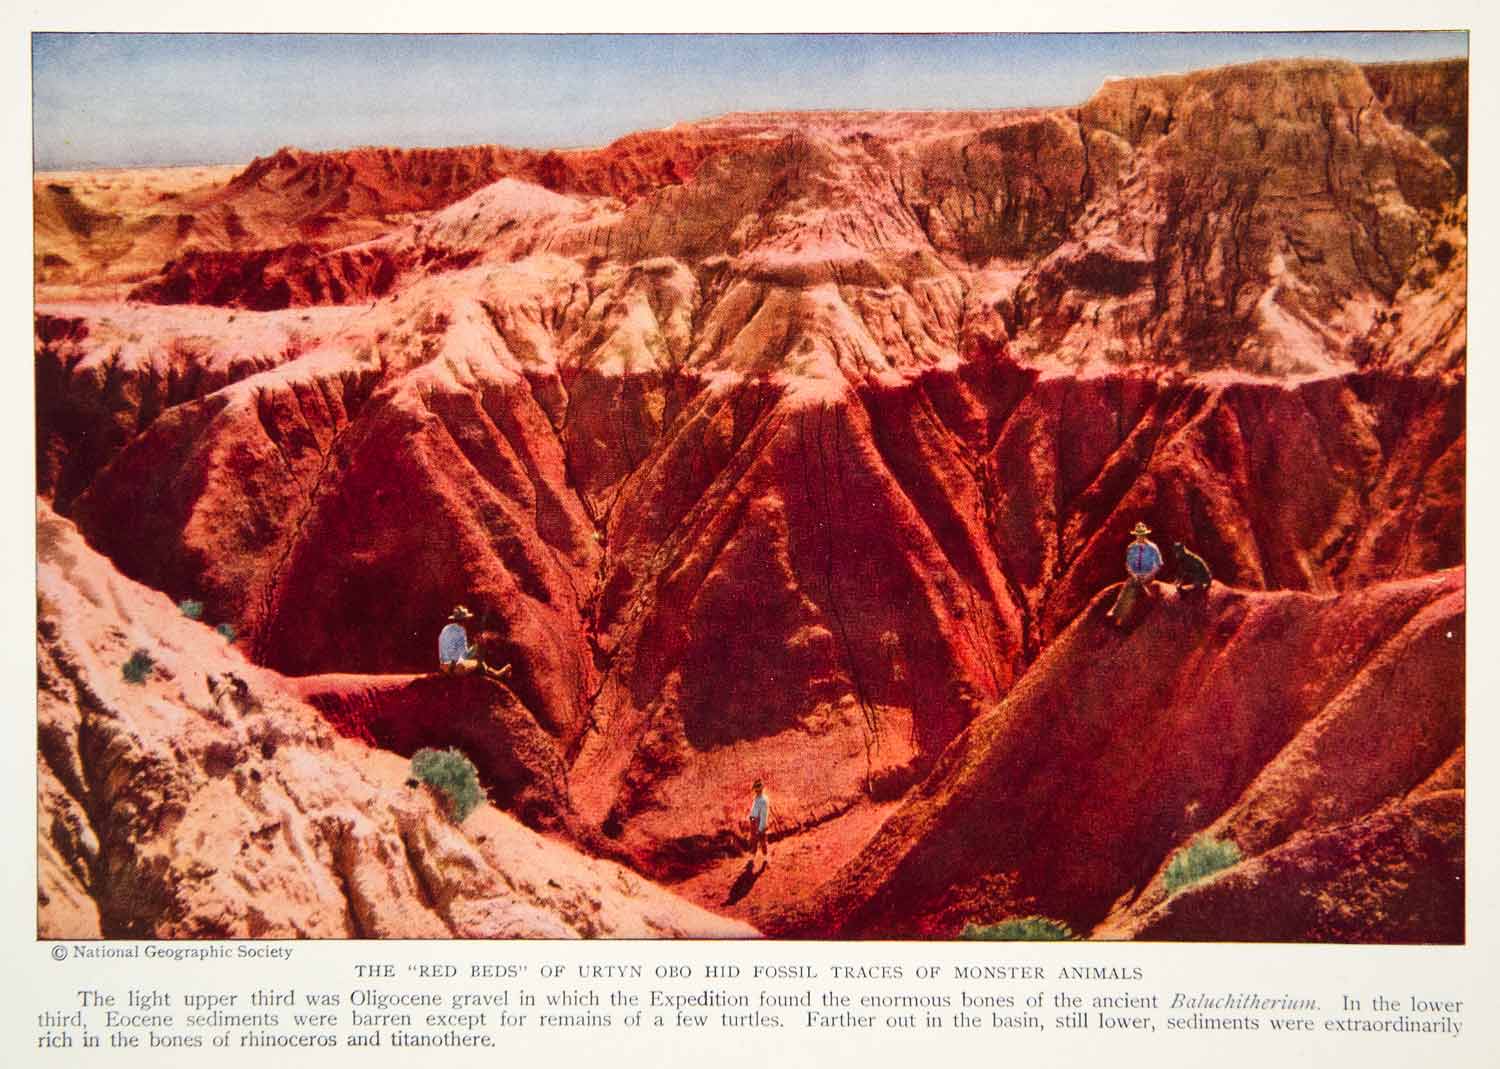 1933 Color Print Urtyn Obo Red Bed Gobi Desert Landscape Historical Image NGMA3